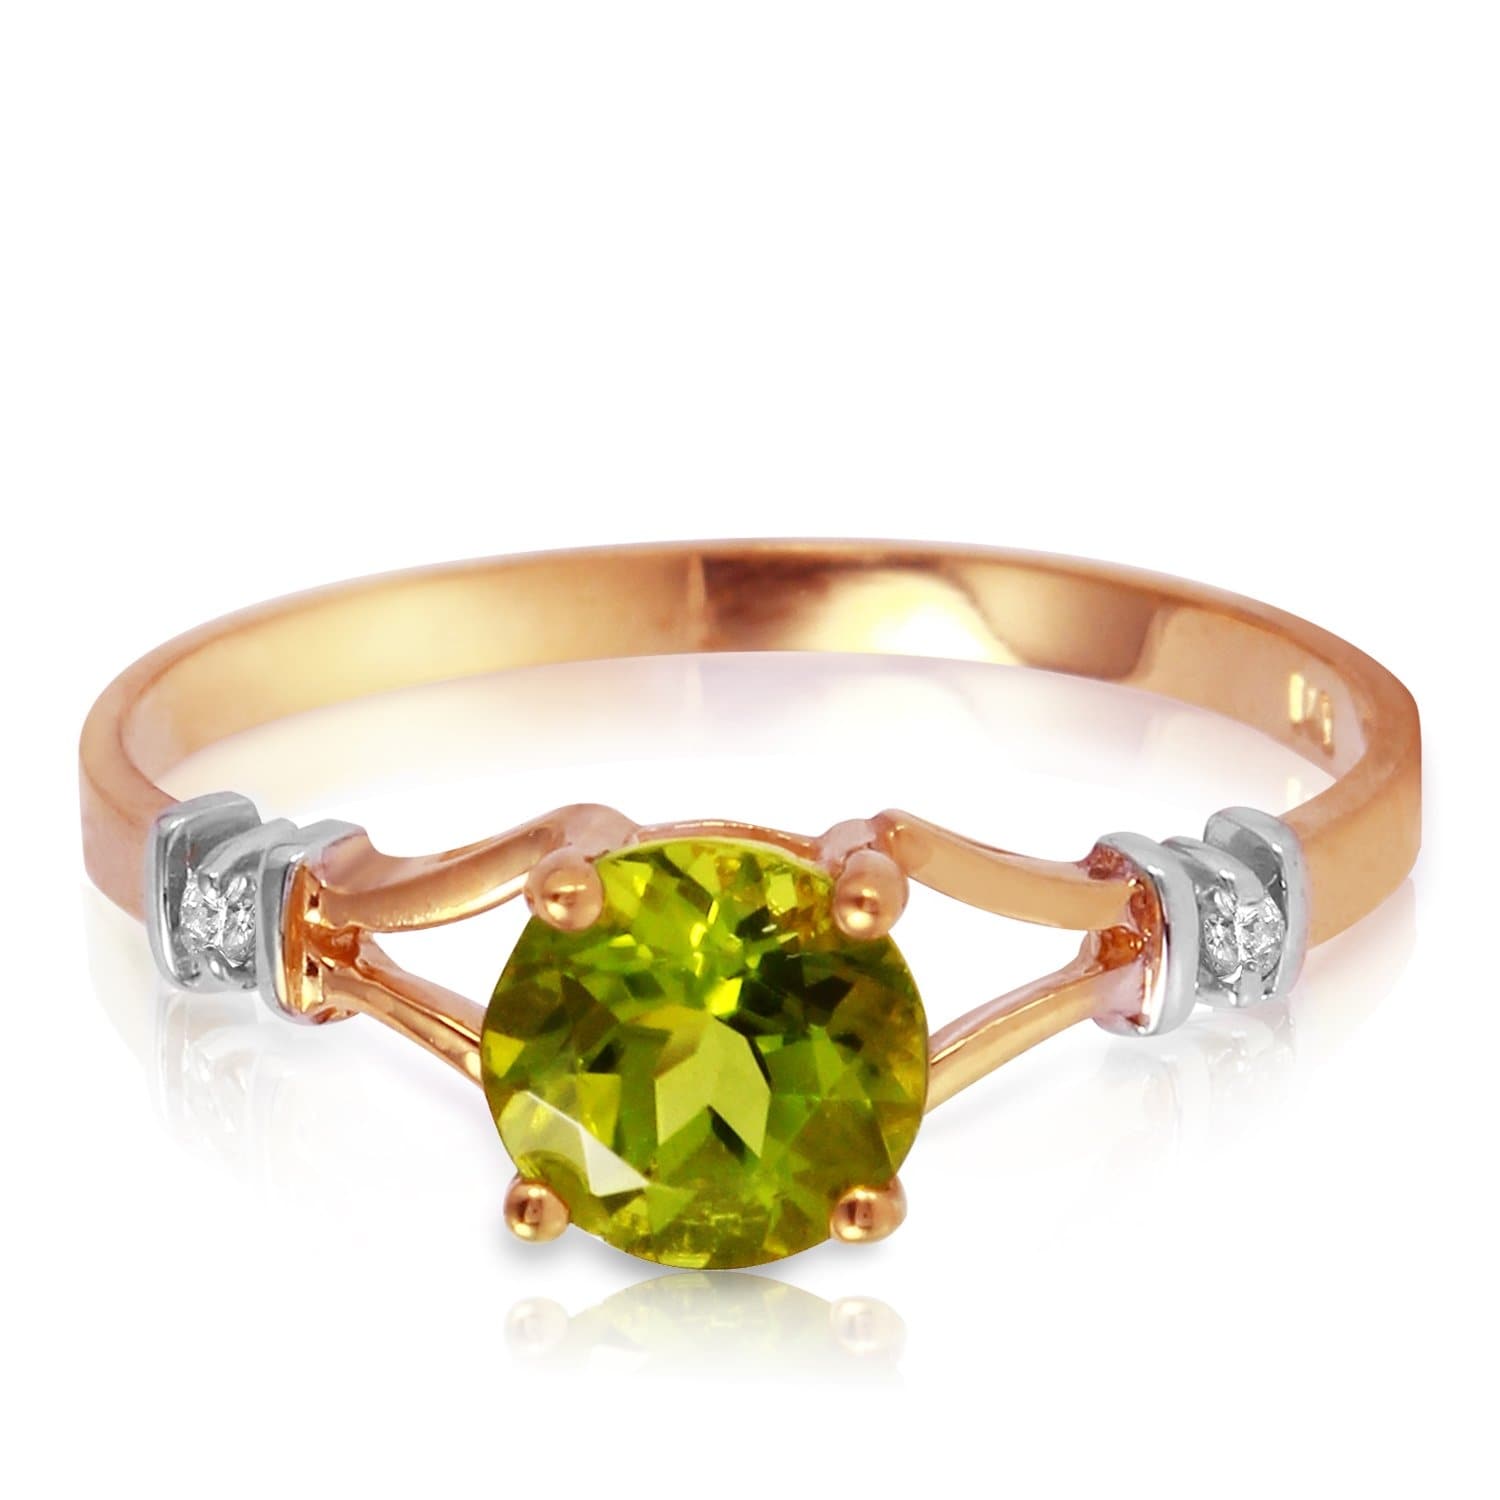 14K Solid Gold 0.87 Carat Diamond Ring w/ Round Green Peridot Gemstone